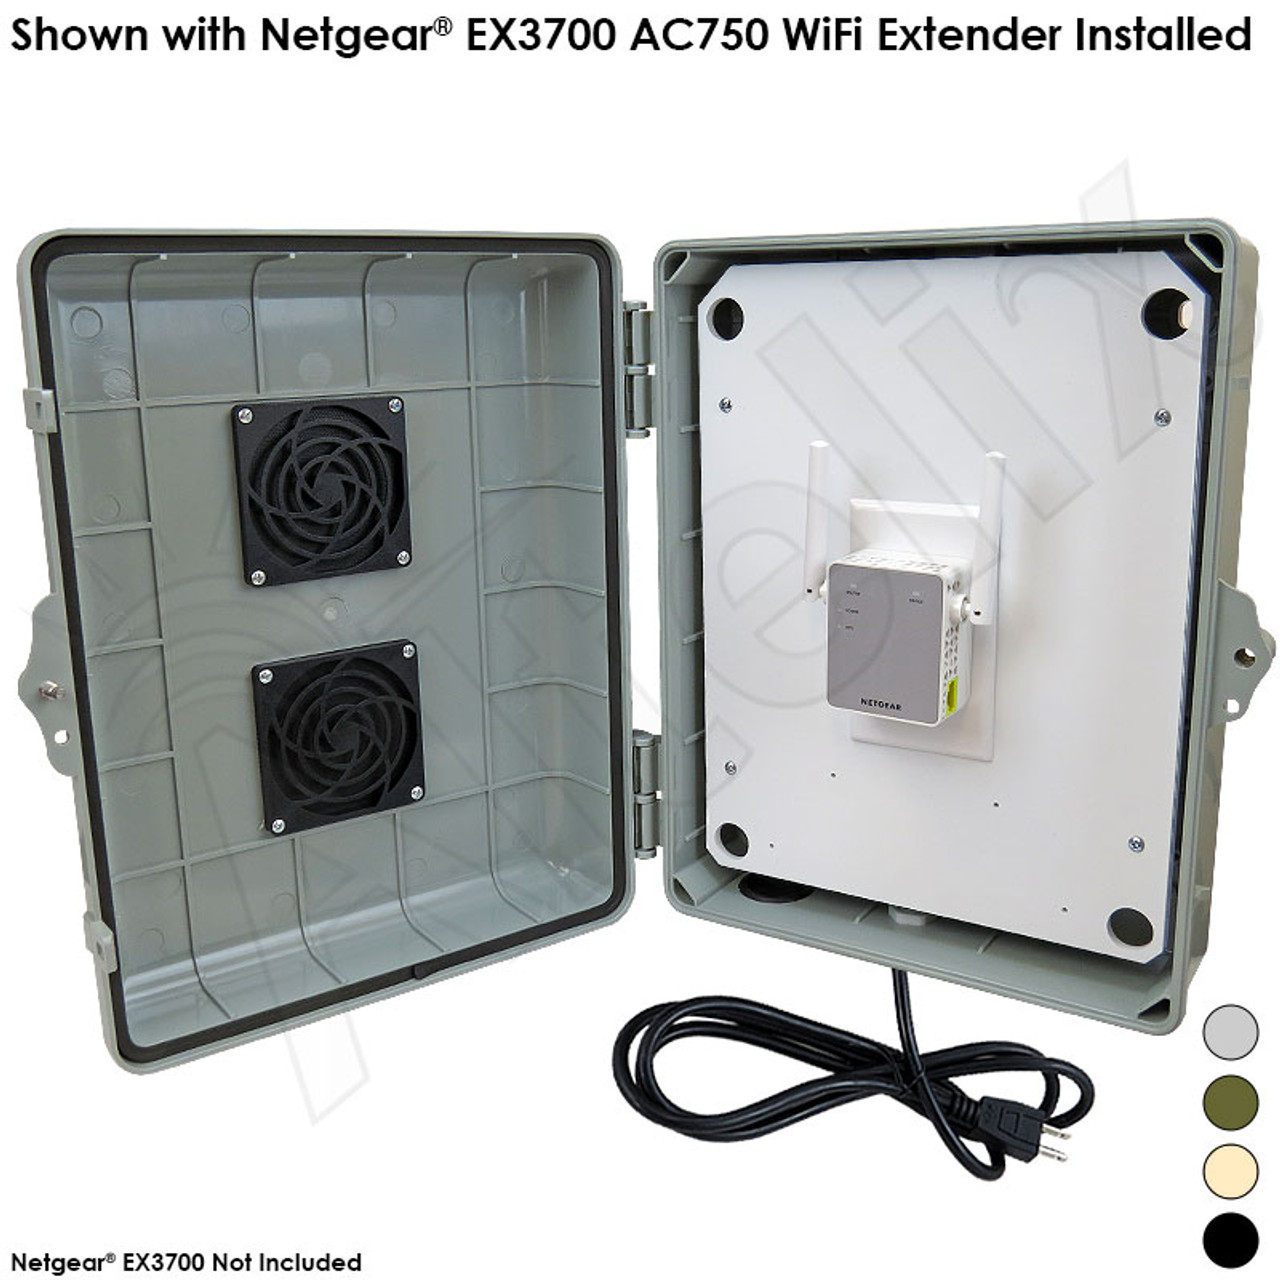 Jurassic Park fugl backup Altelix Weatherproof Vented WiFi Enclosure for Netgear® EX3700 AC750 WiFi  Extender - Altelix